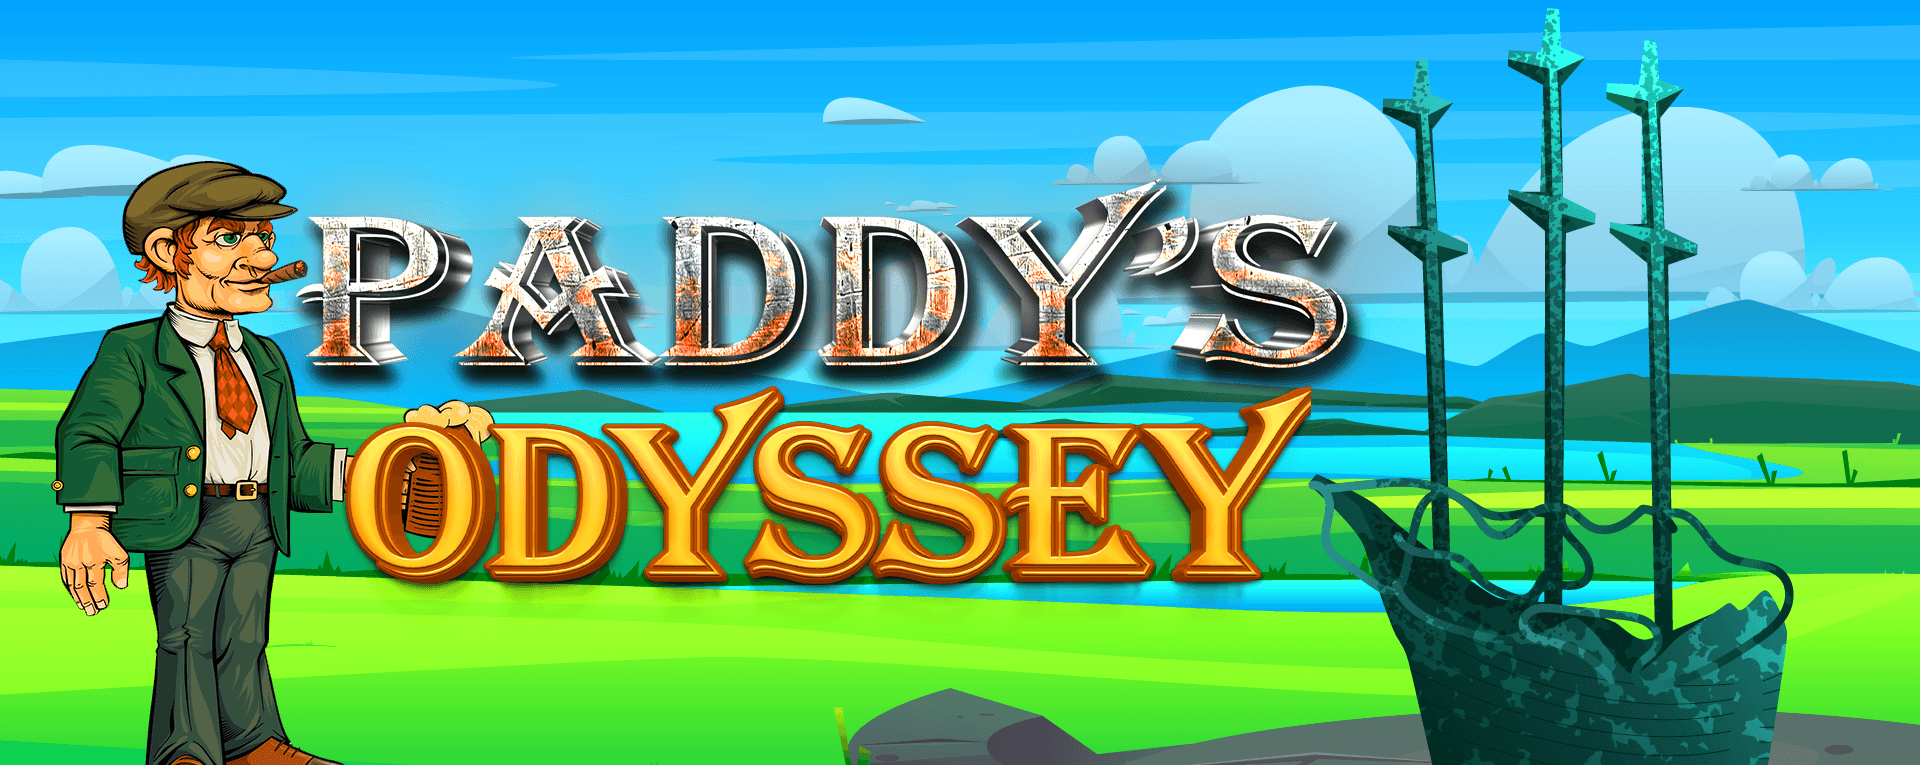 Paddys_Odyssey banner